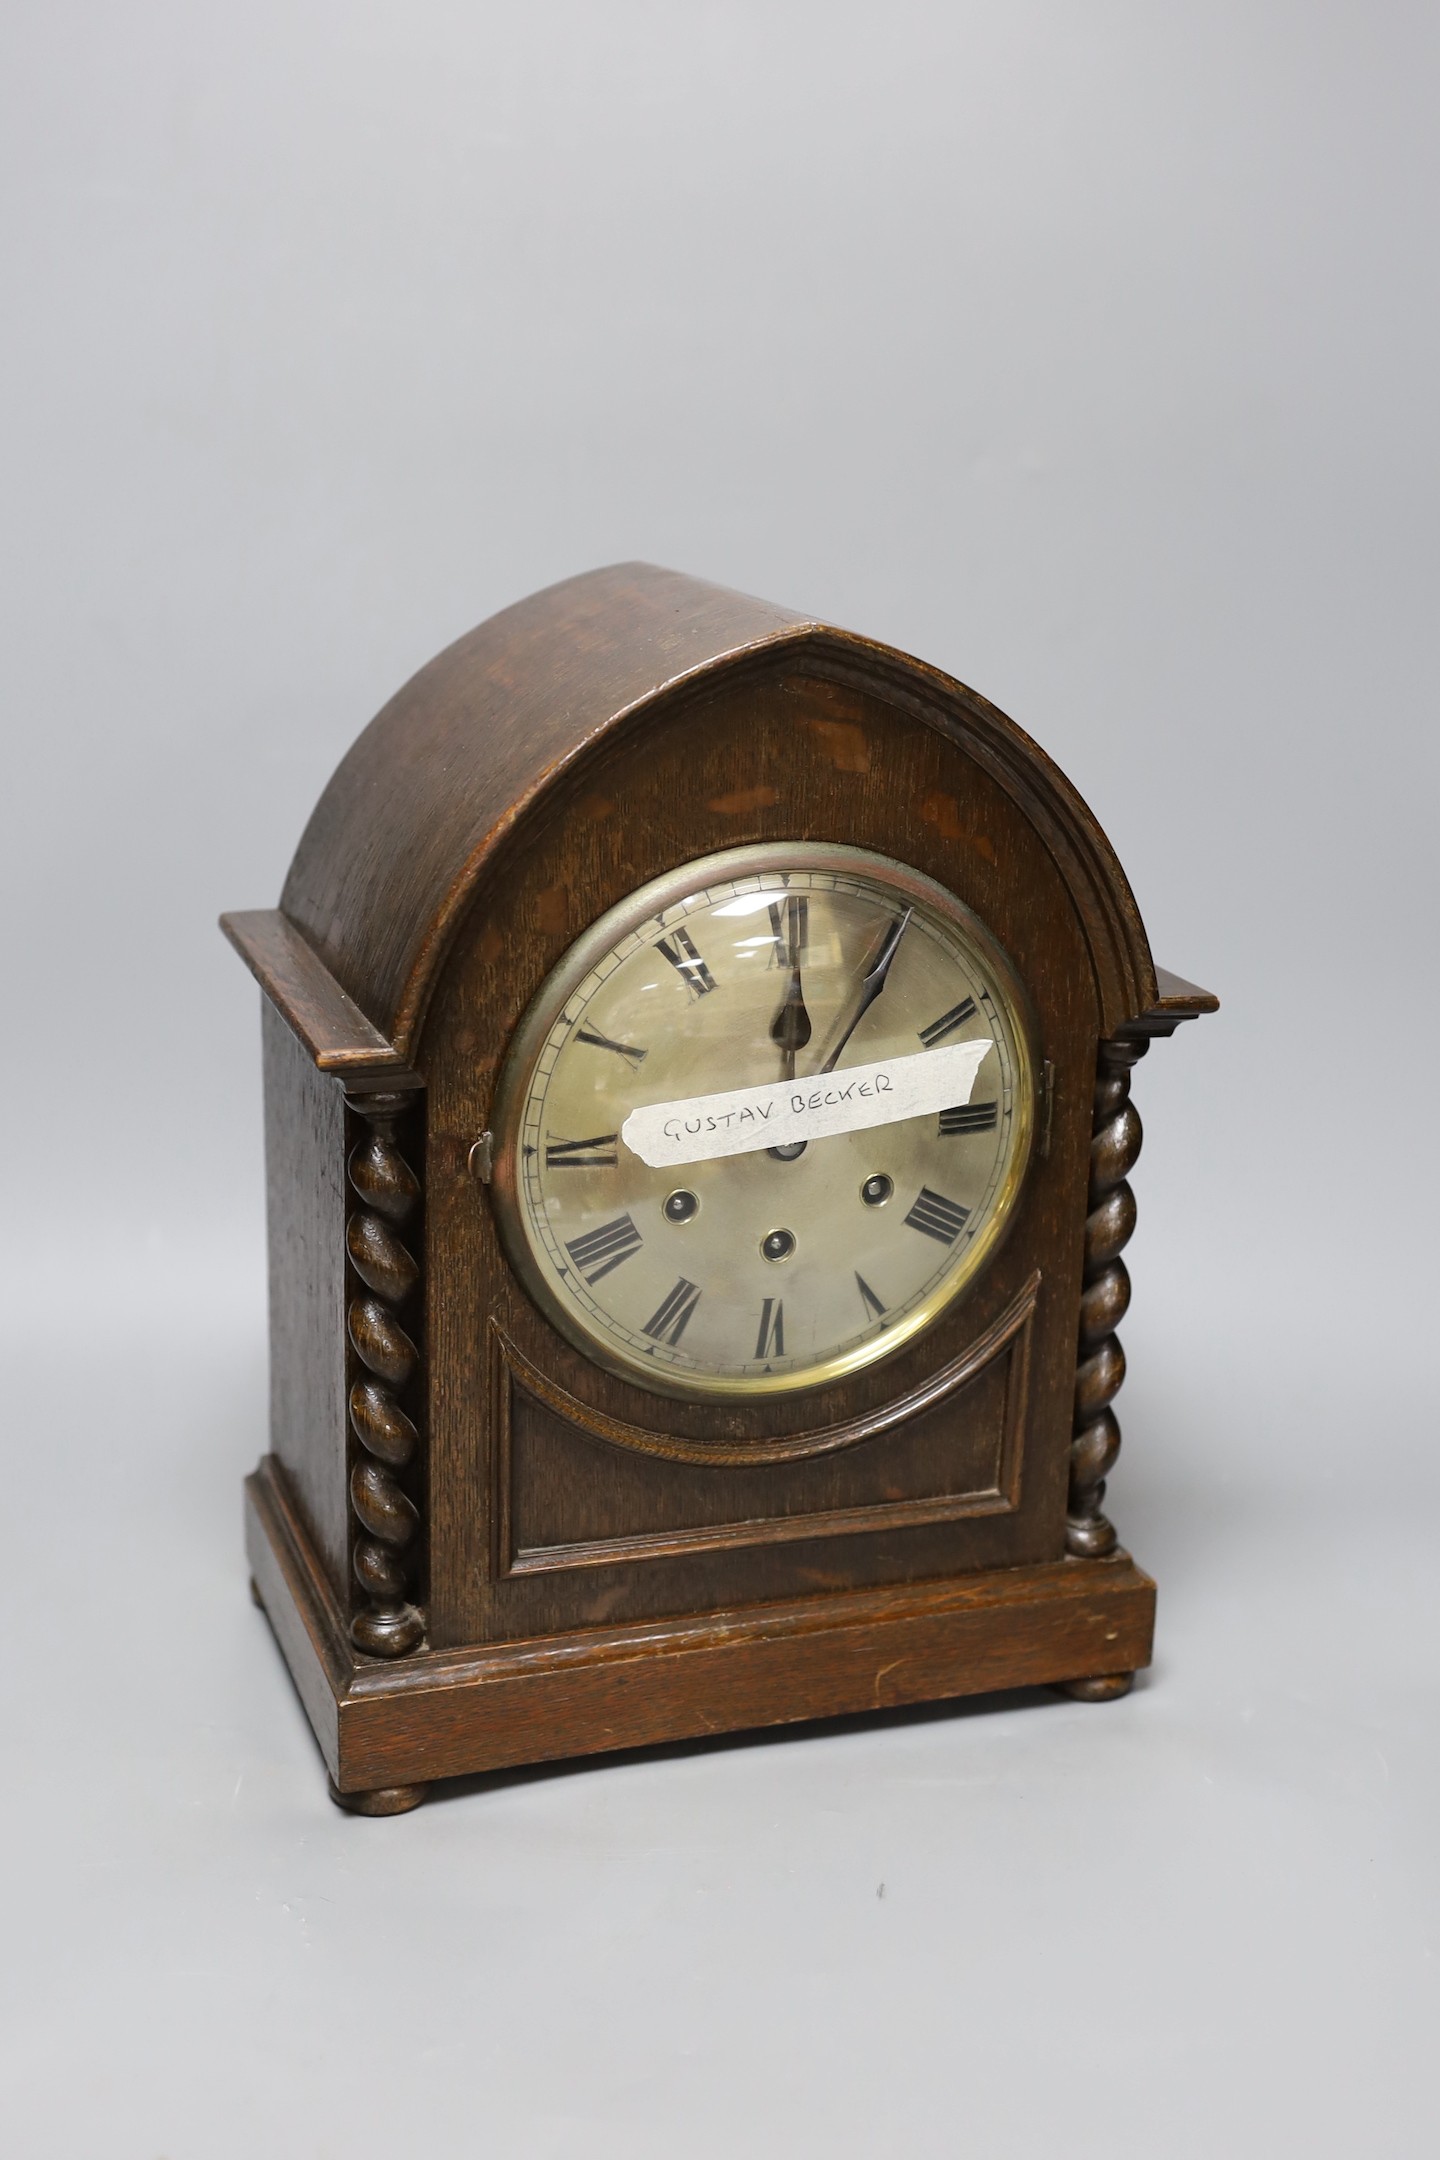 An oak cased chiming bracket clock, 34.5 cm high